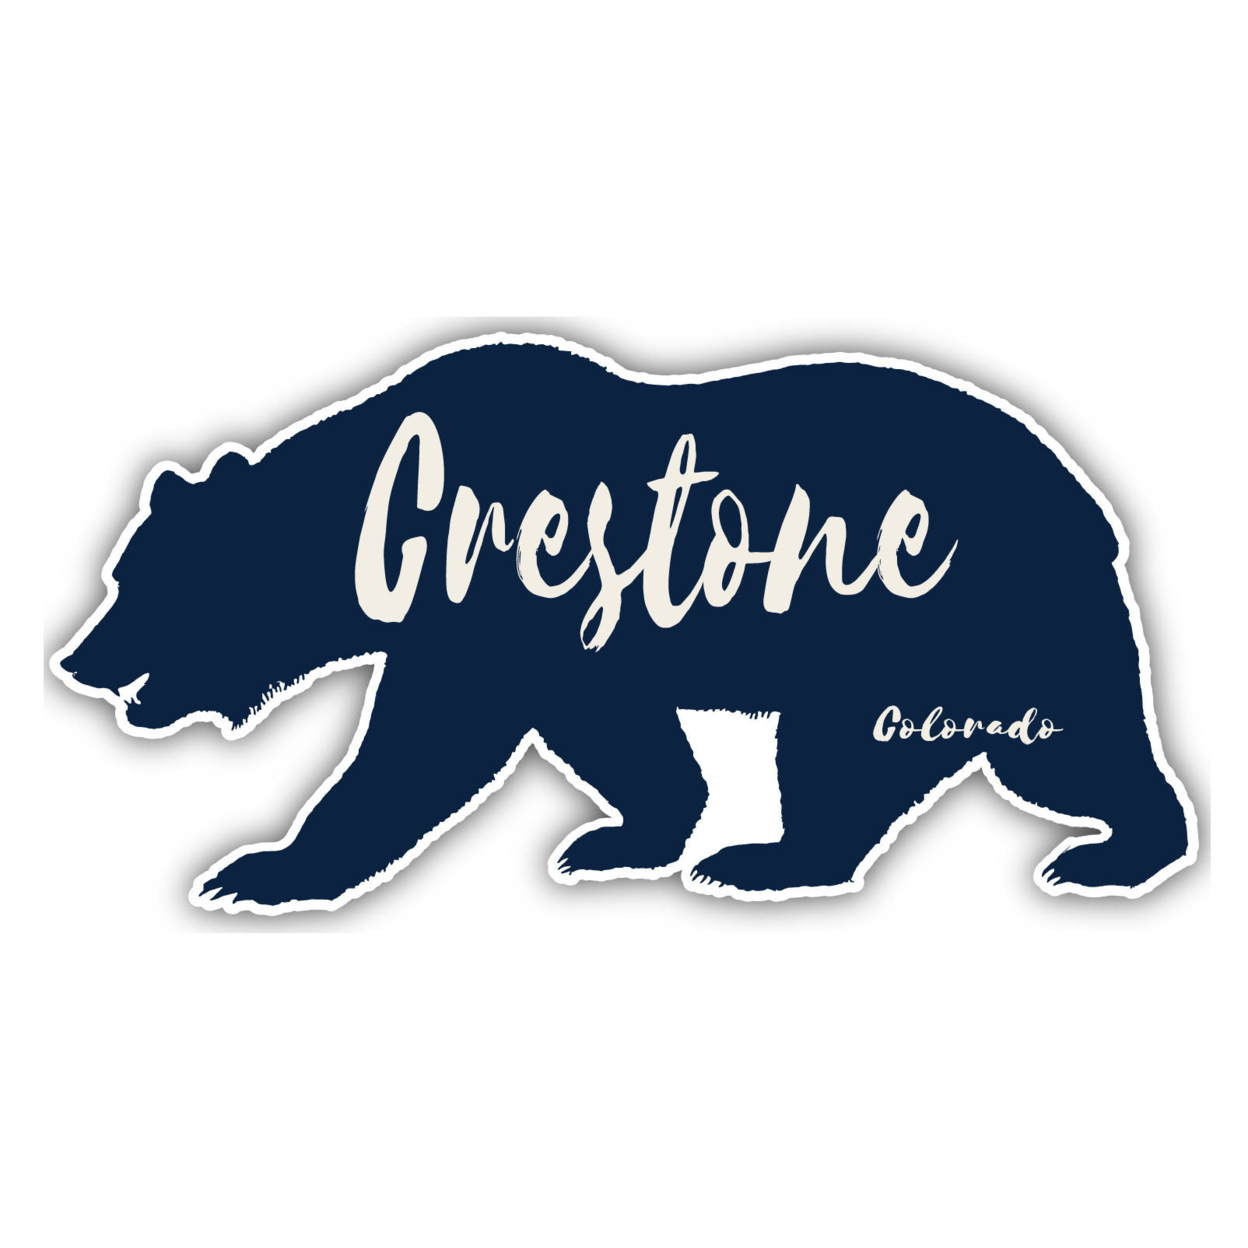 Crestone Colorado Souvenir Decorative Stickers (Choose Theme And Size) - Single Unit, 8-Inch, Bear